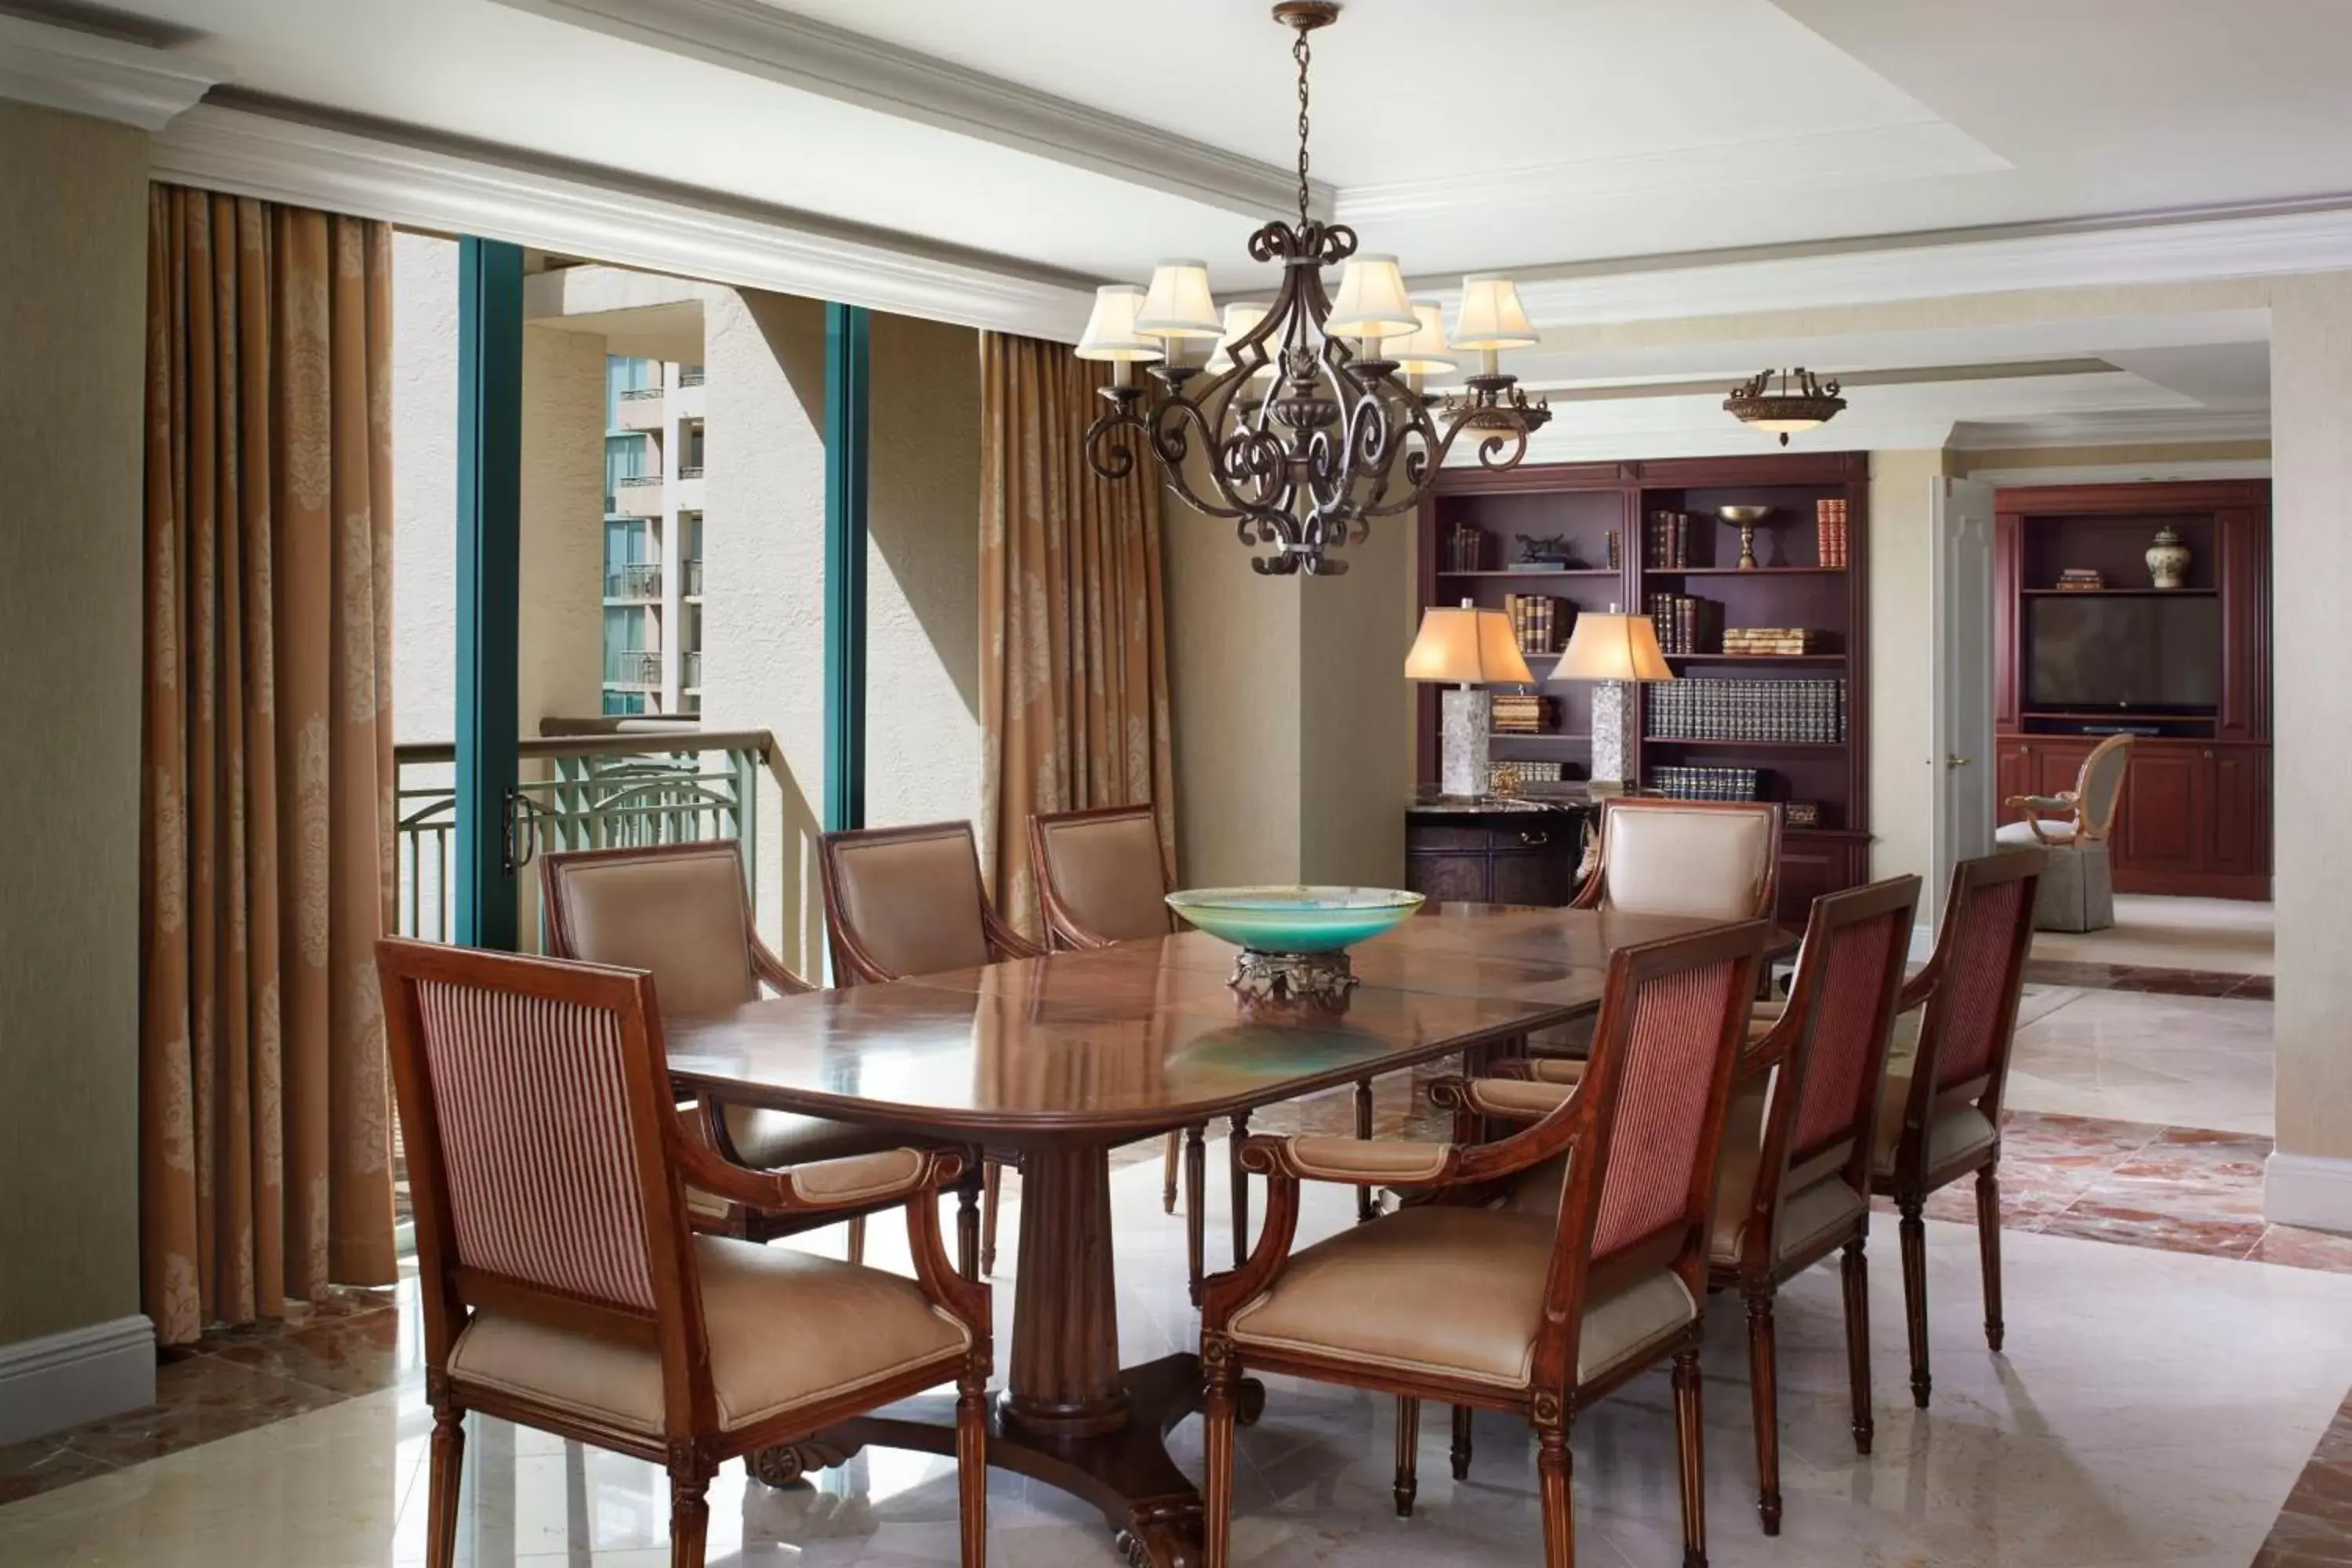 Photo of the whole room, Dining Area in The Ritz-Carlton Coconut Grove, Miami